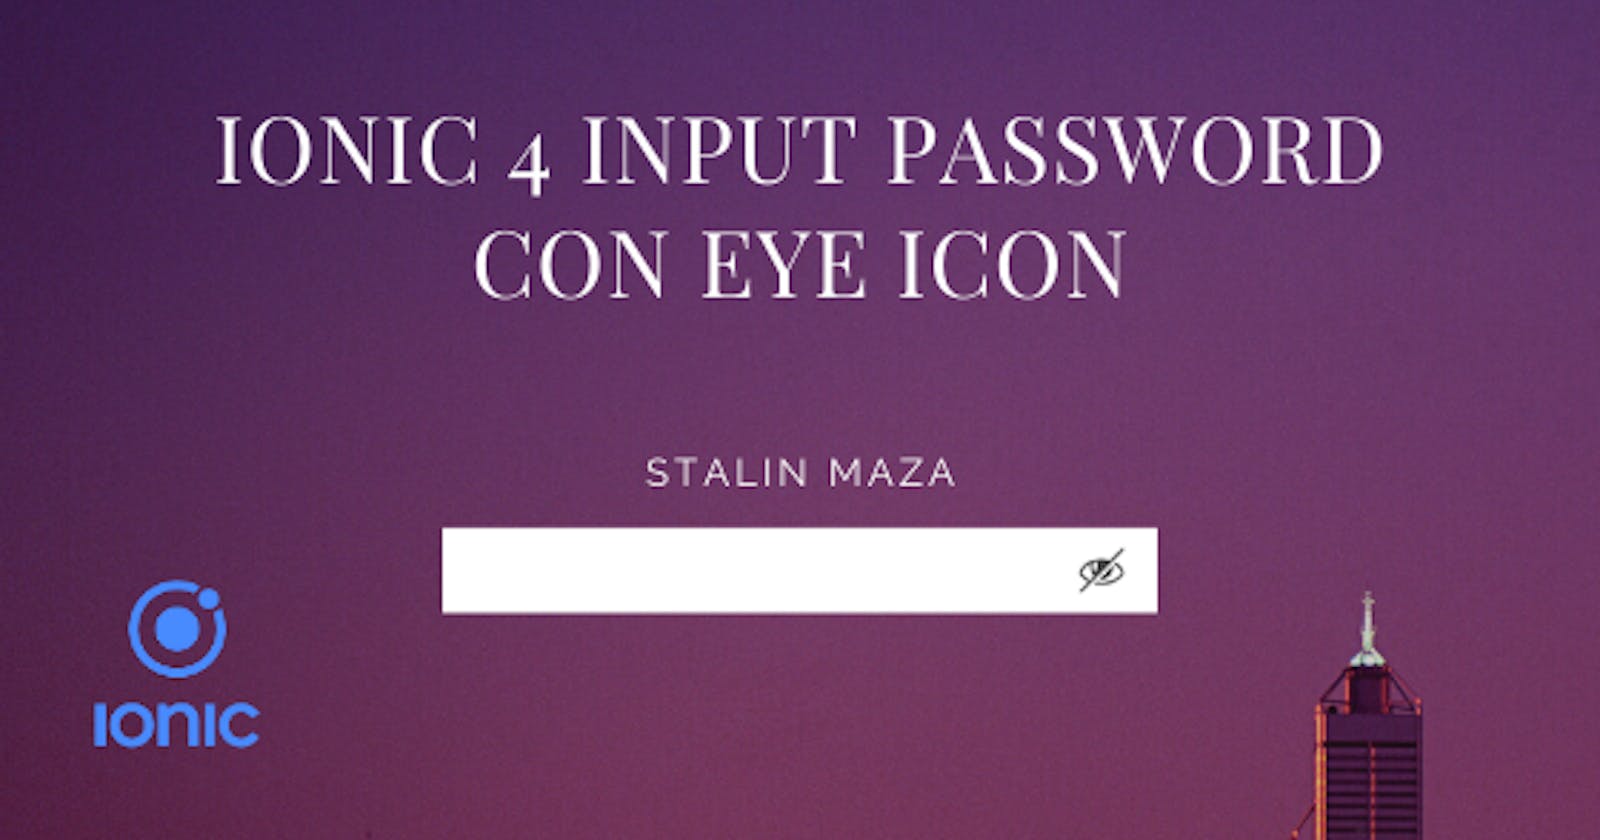 Ionic 4 Input Password con botón para mostrar/ocultar texto